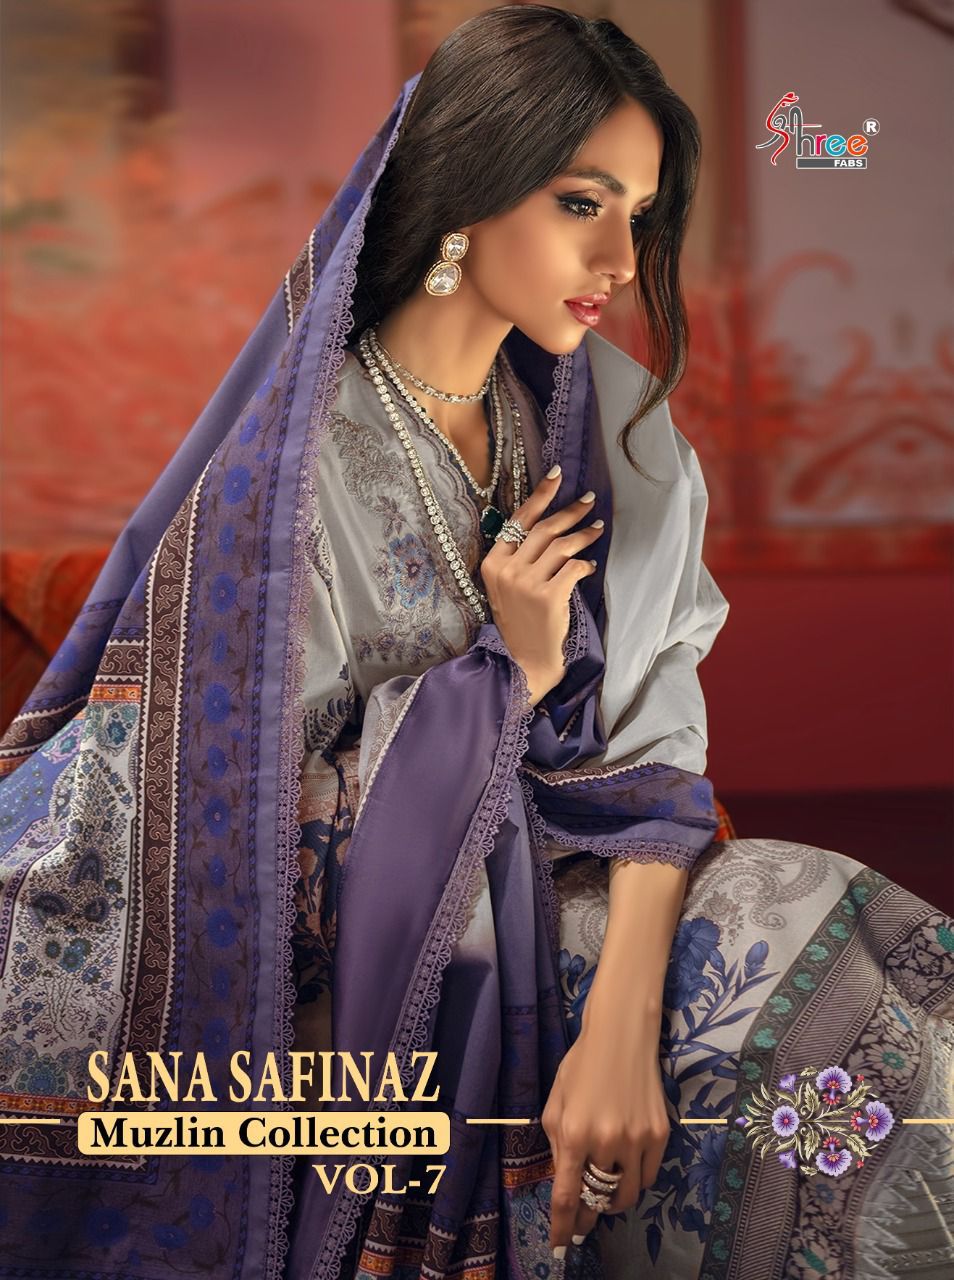 Shree Fabs Sana Safinaz Mulzin Collection Vol 7 Salwar Kameez Cotton Dupatta Set Wholesale Price